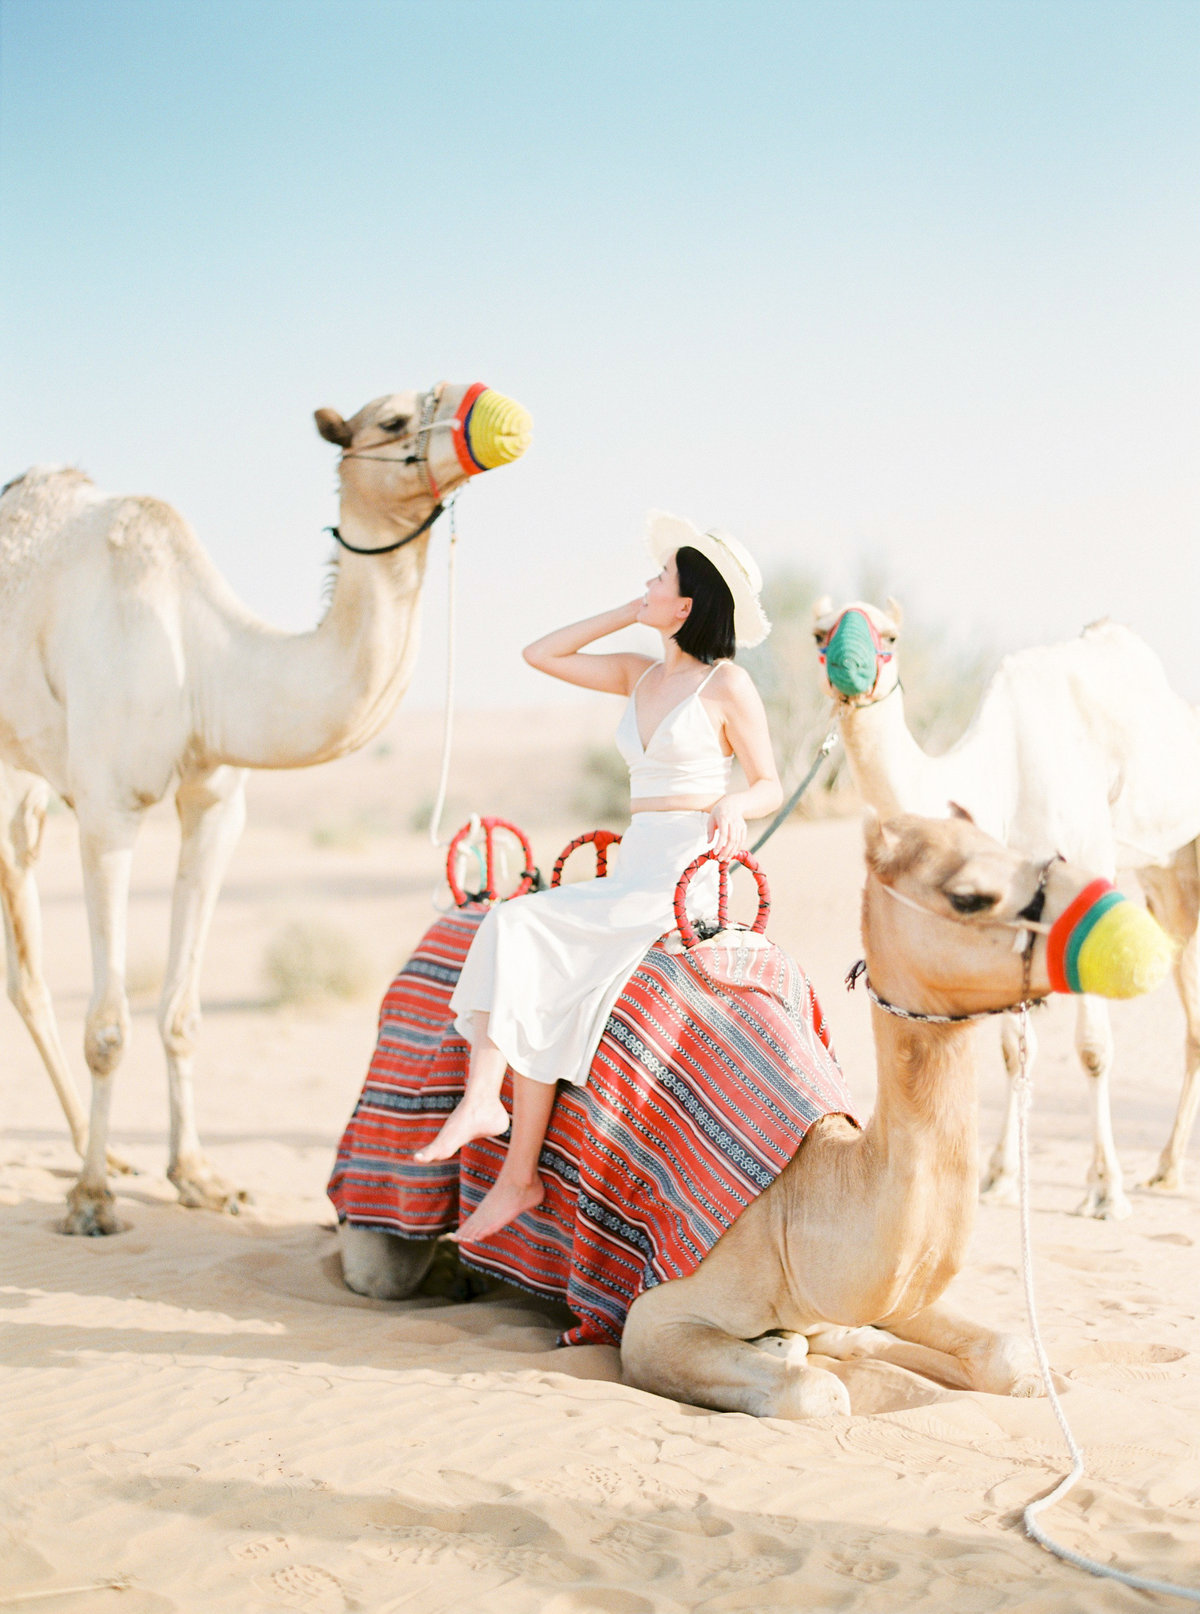 Maria_Sundin_Photography_Desert_Couple_Dubai_Maggie-37